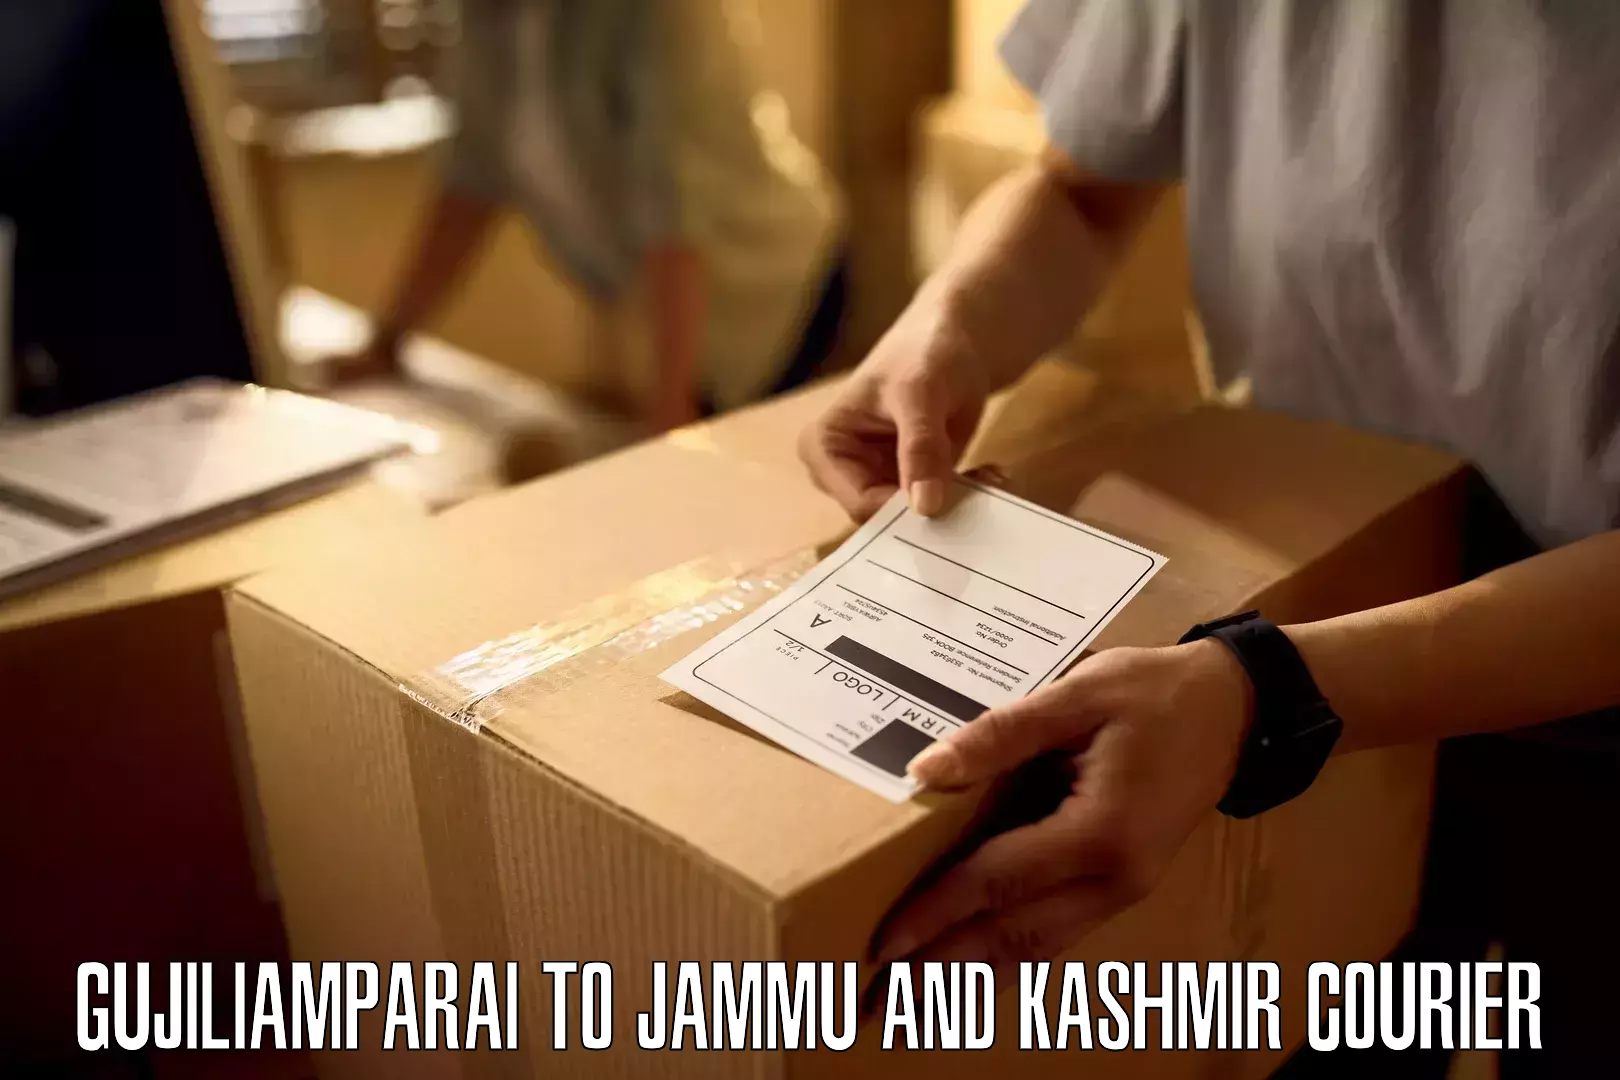 Pharmaceutical courier Gujiliamparai to Jammu and Kashmir